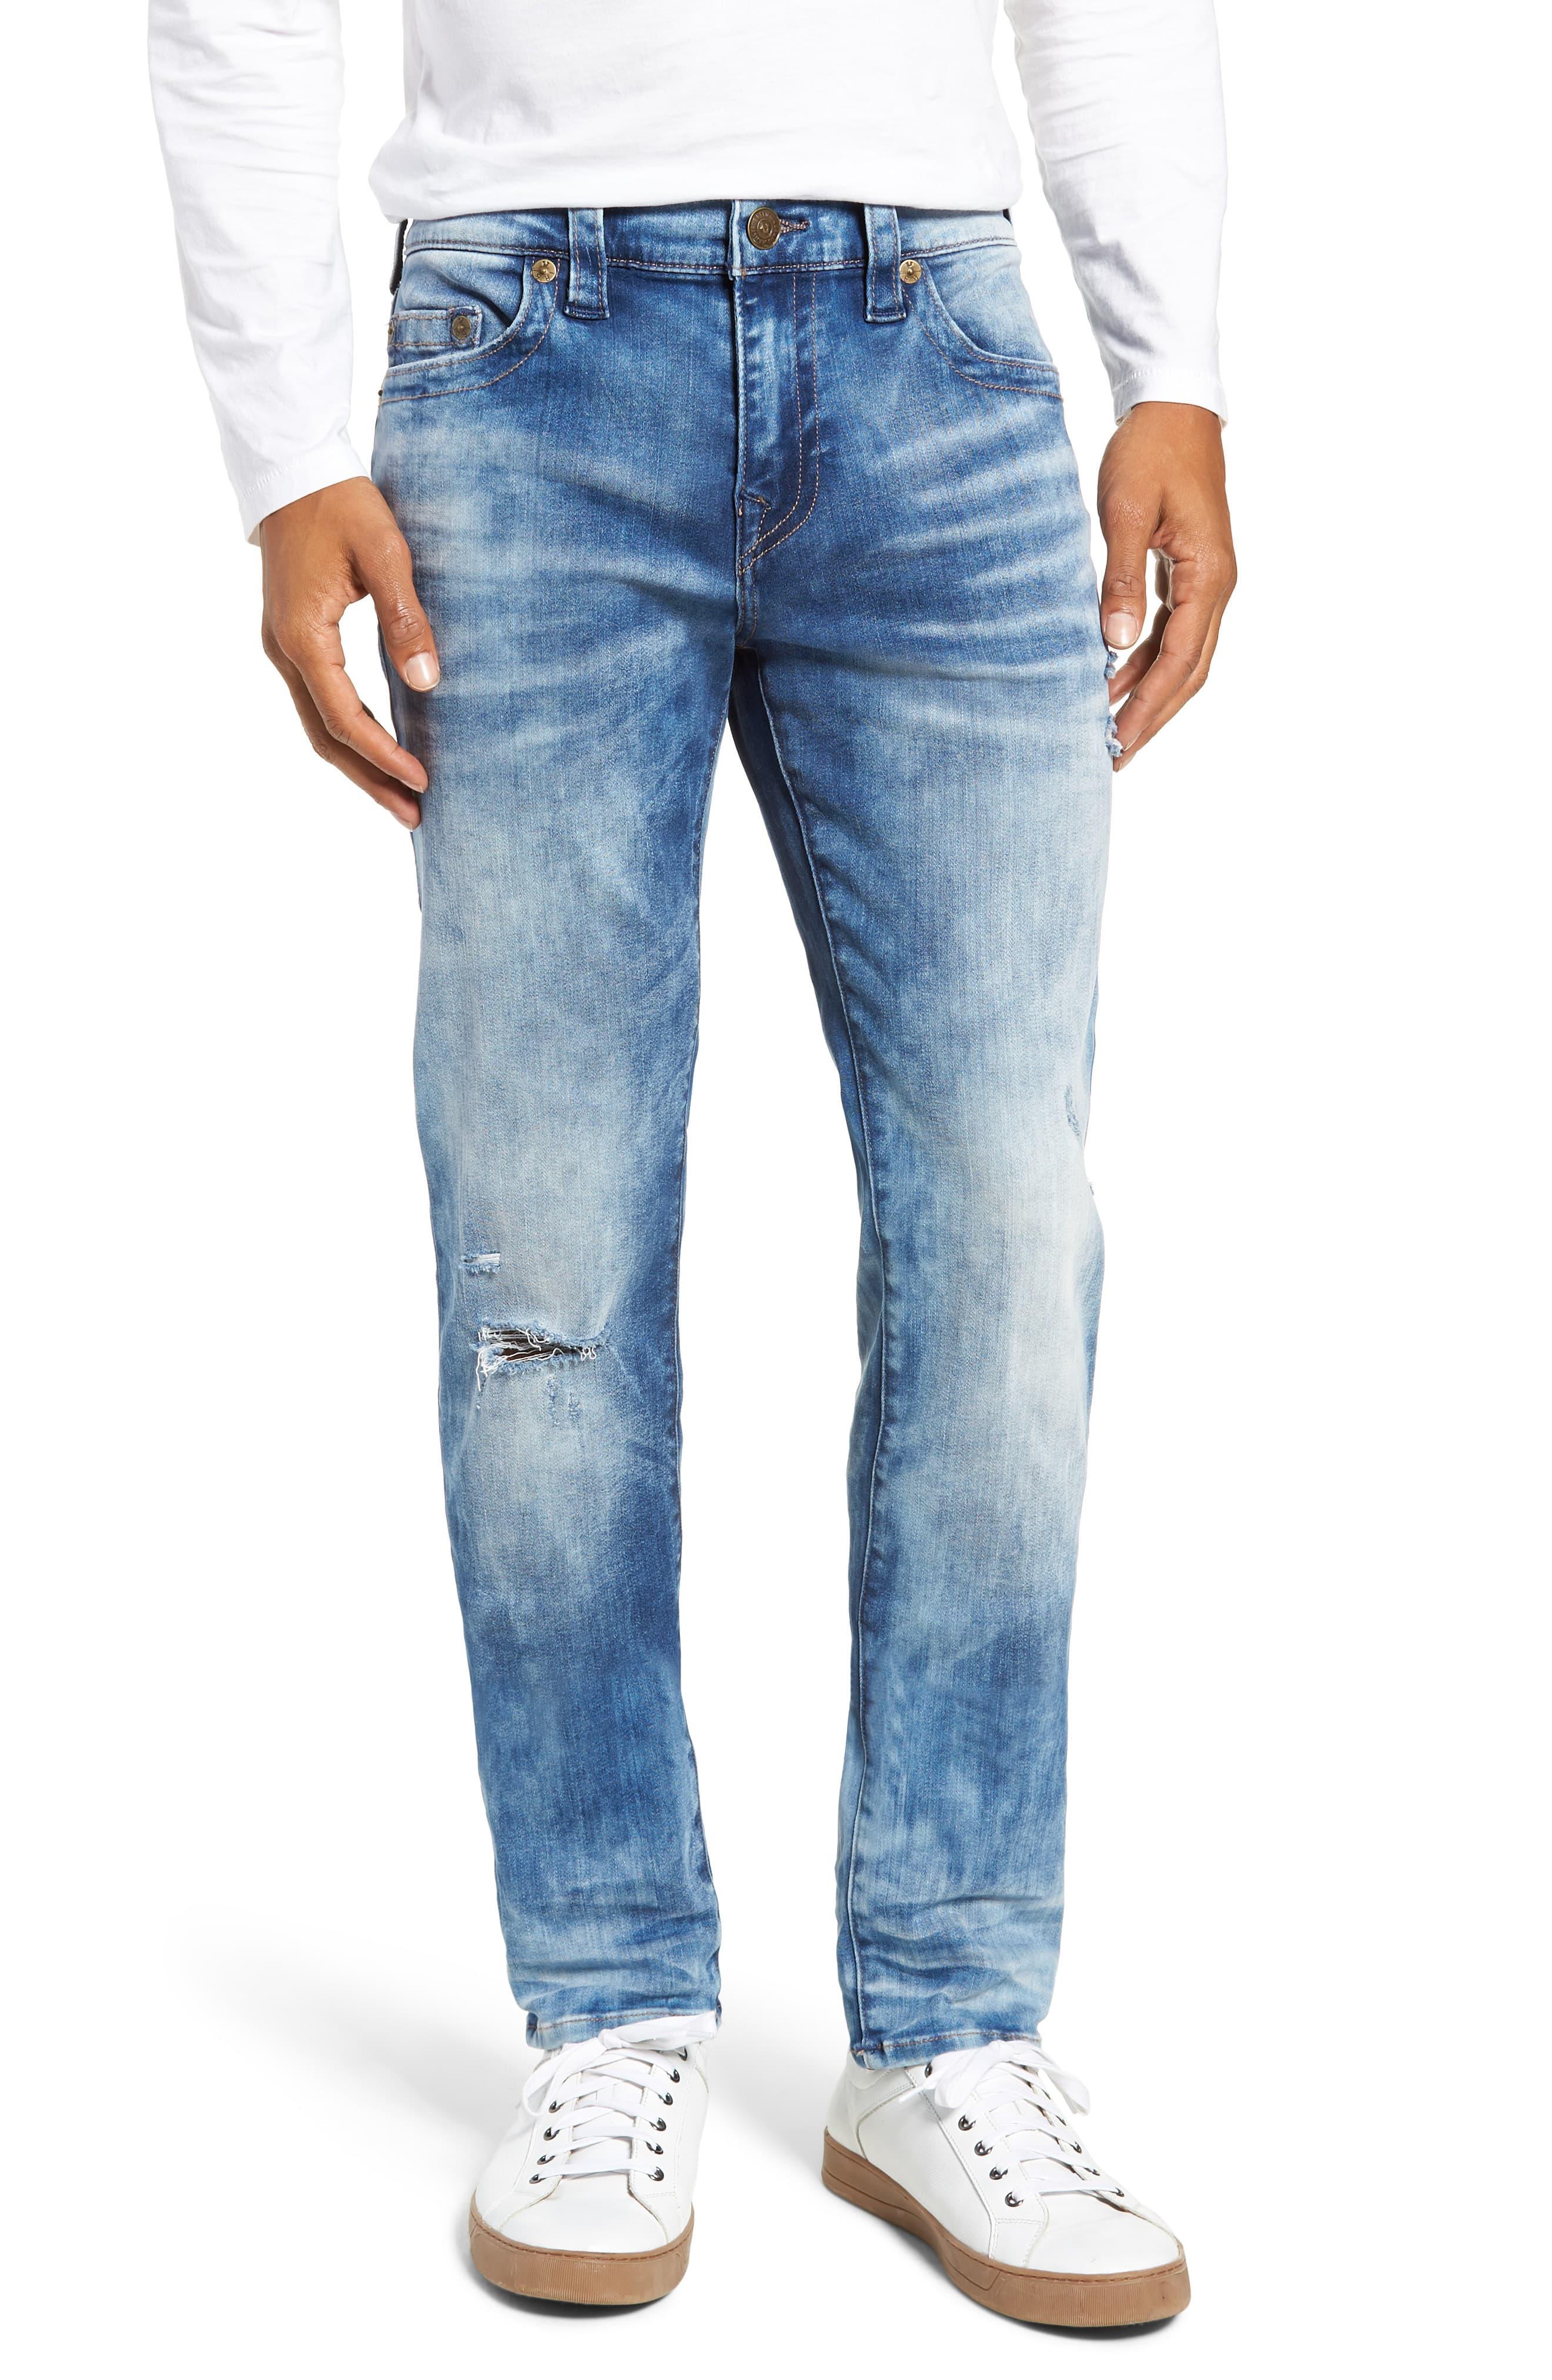 True Religion Denim Rocco Skinny Fit Jeans in Blue for Men - Lyst